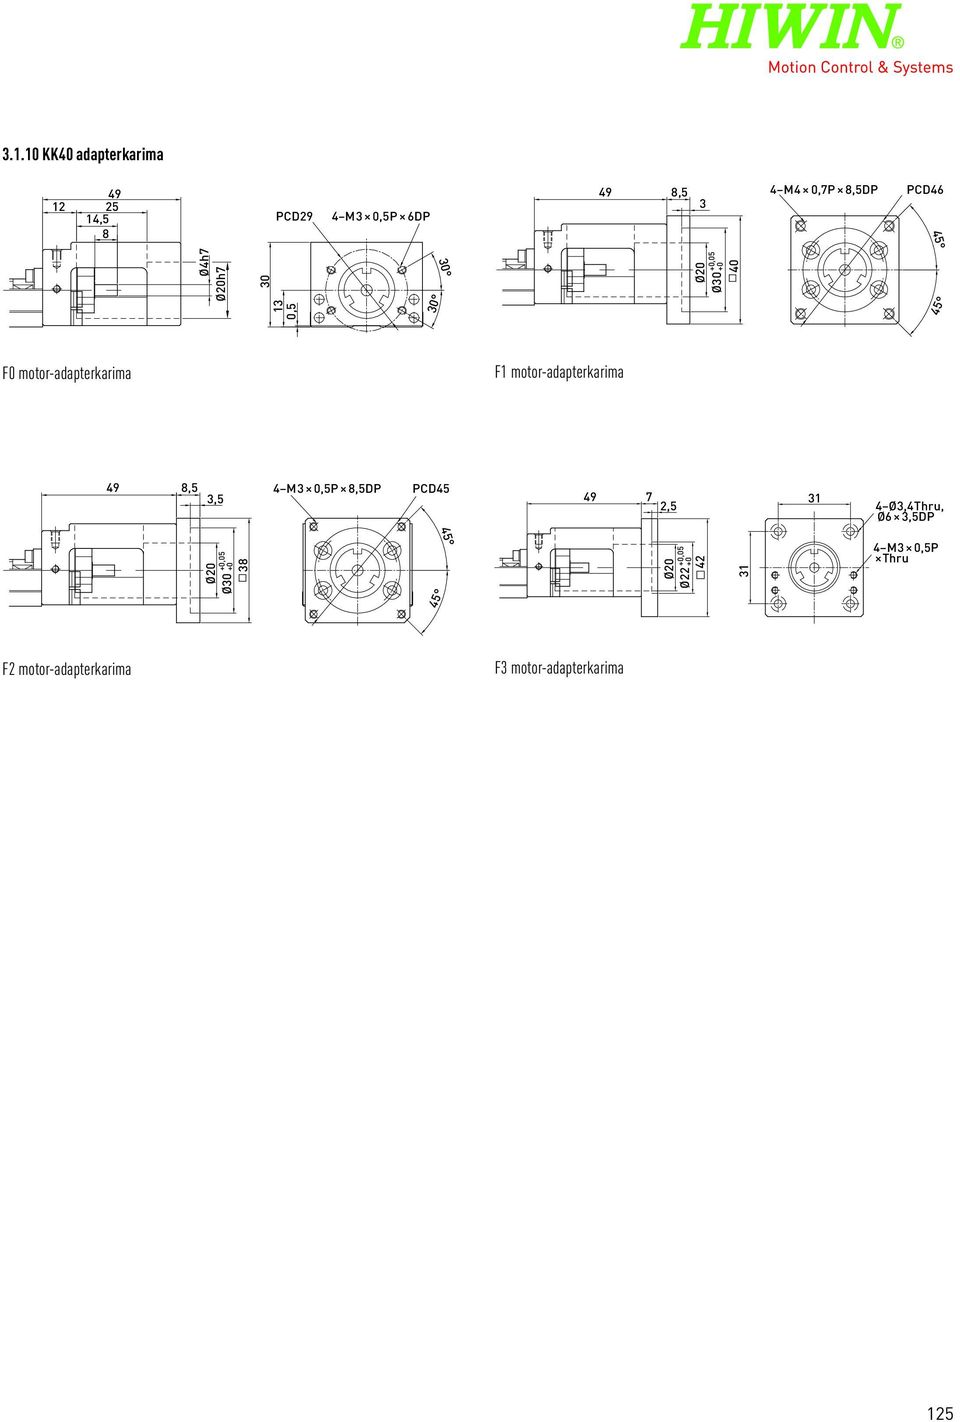 motor-adapterkarima 49 8,5 4 M3 0,5P 8,5DP PCD45 49 7 2,5 3 4 Ø3,4Thru, Ø6